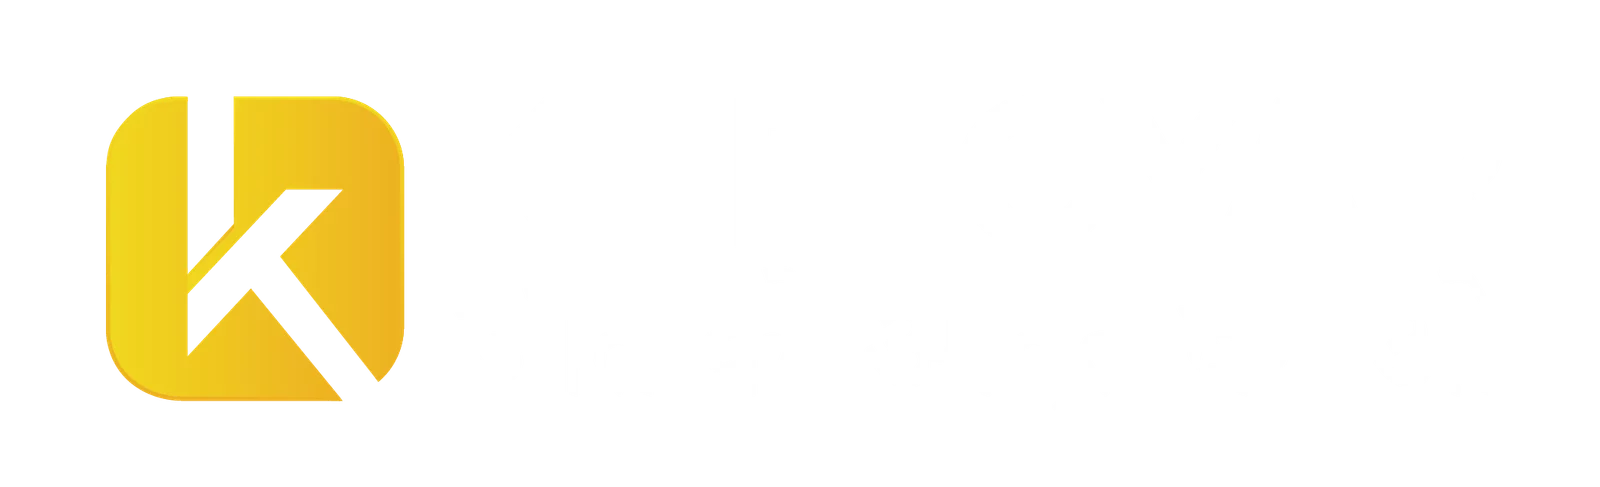 kheloyar logo